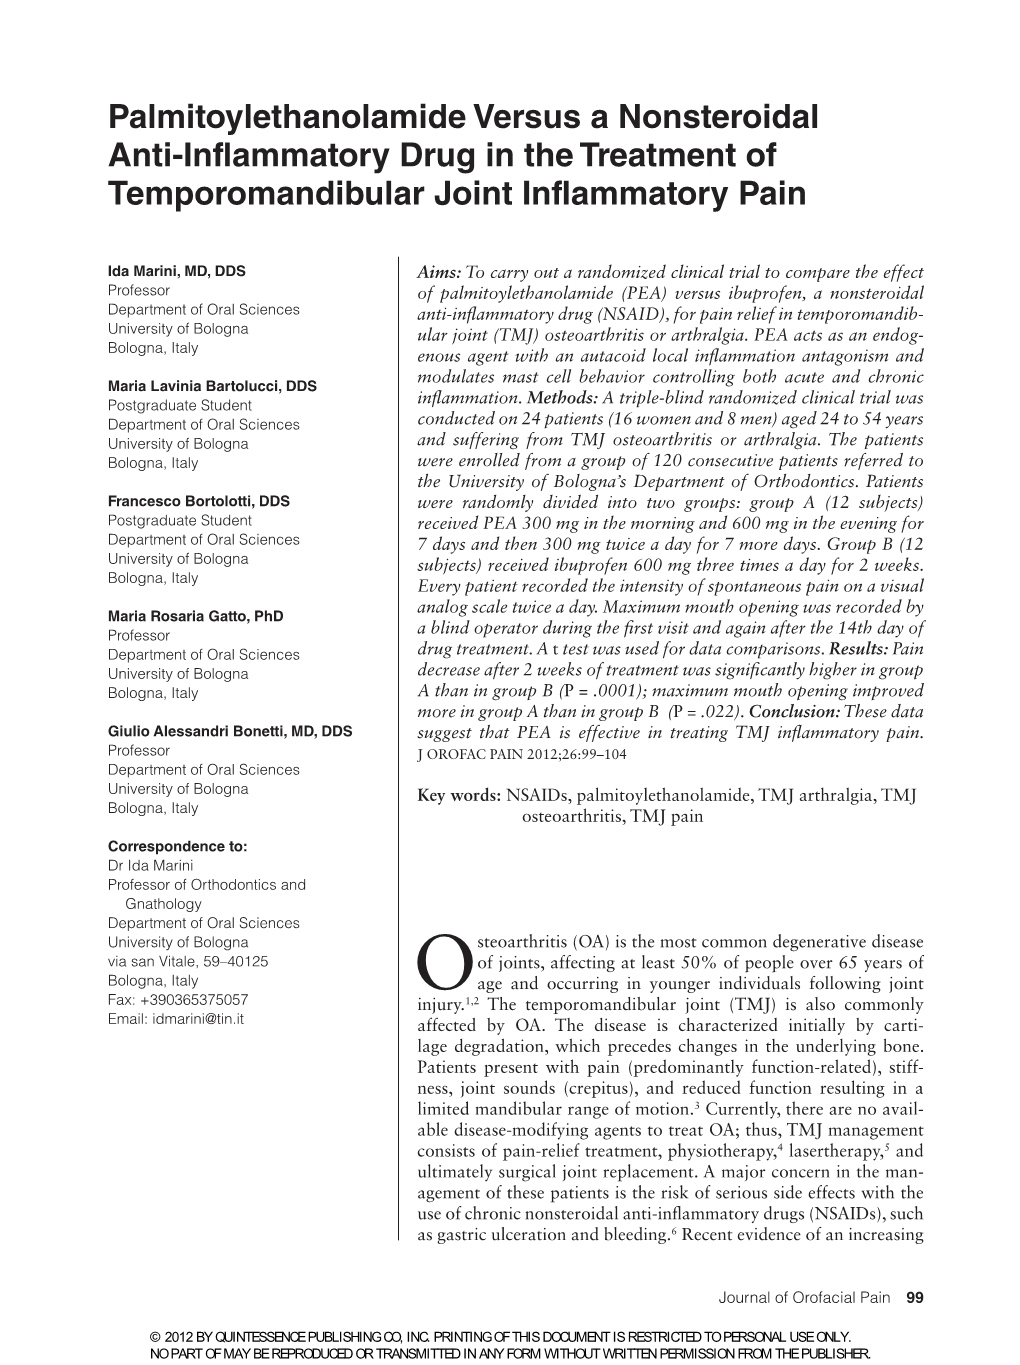 Palmitoylethanolamide Versus a Nonsteroidal Anti-Inflammatory Drug in the Treatment of Temporomandibular Joint Inflammatory Pain